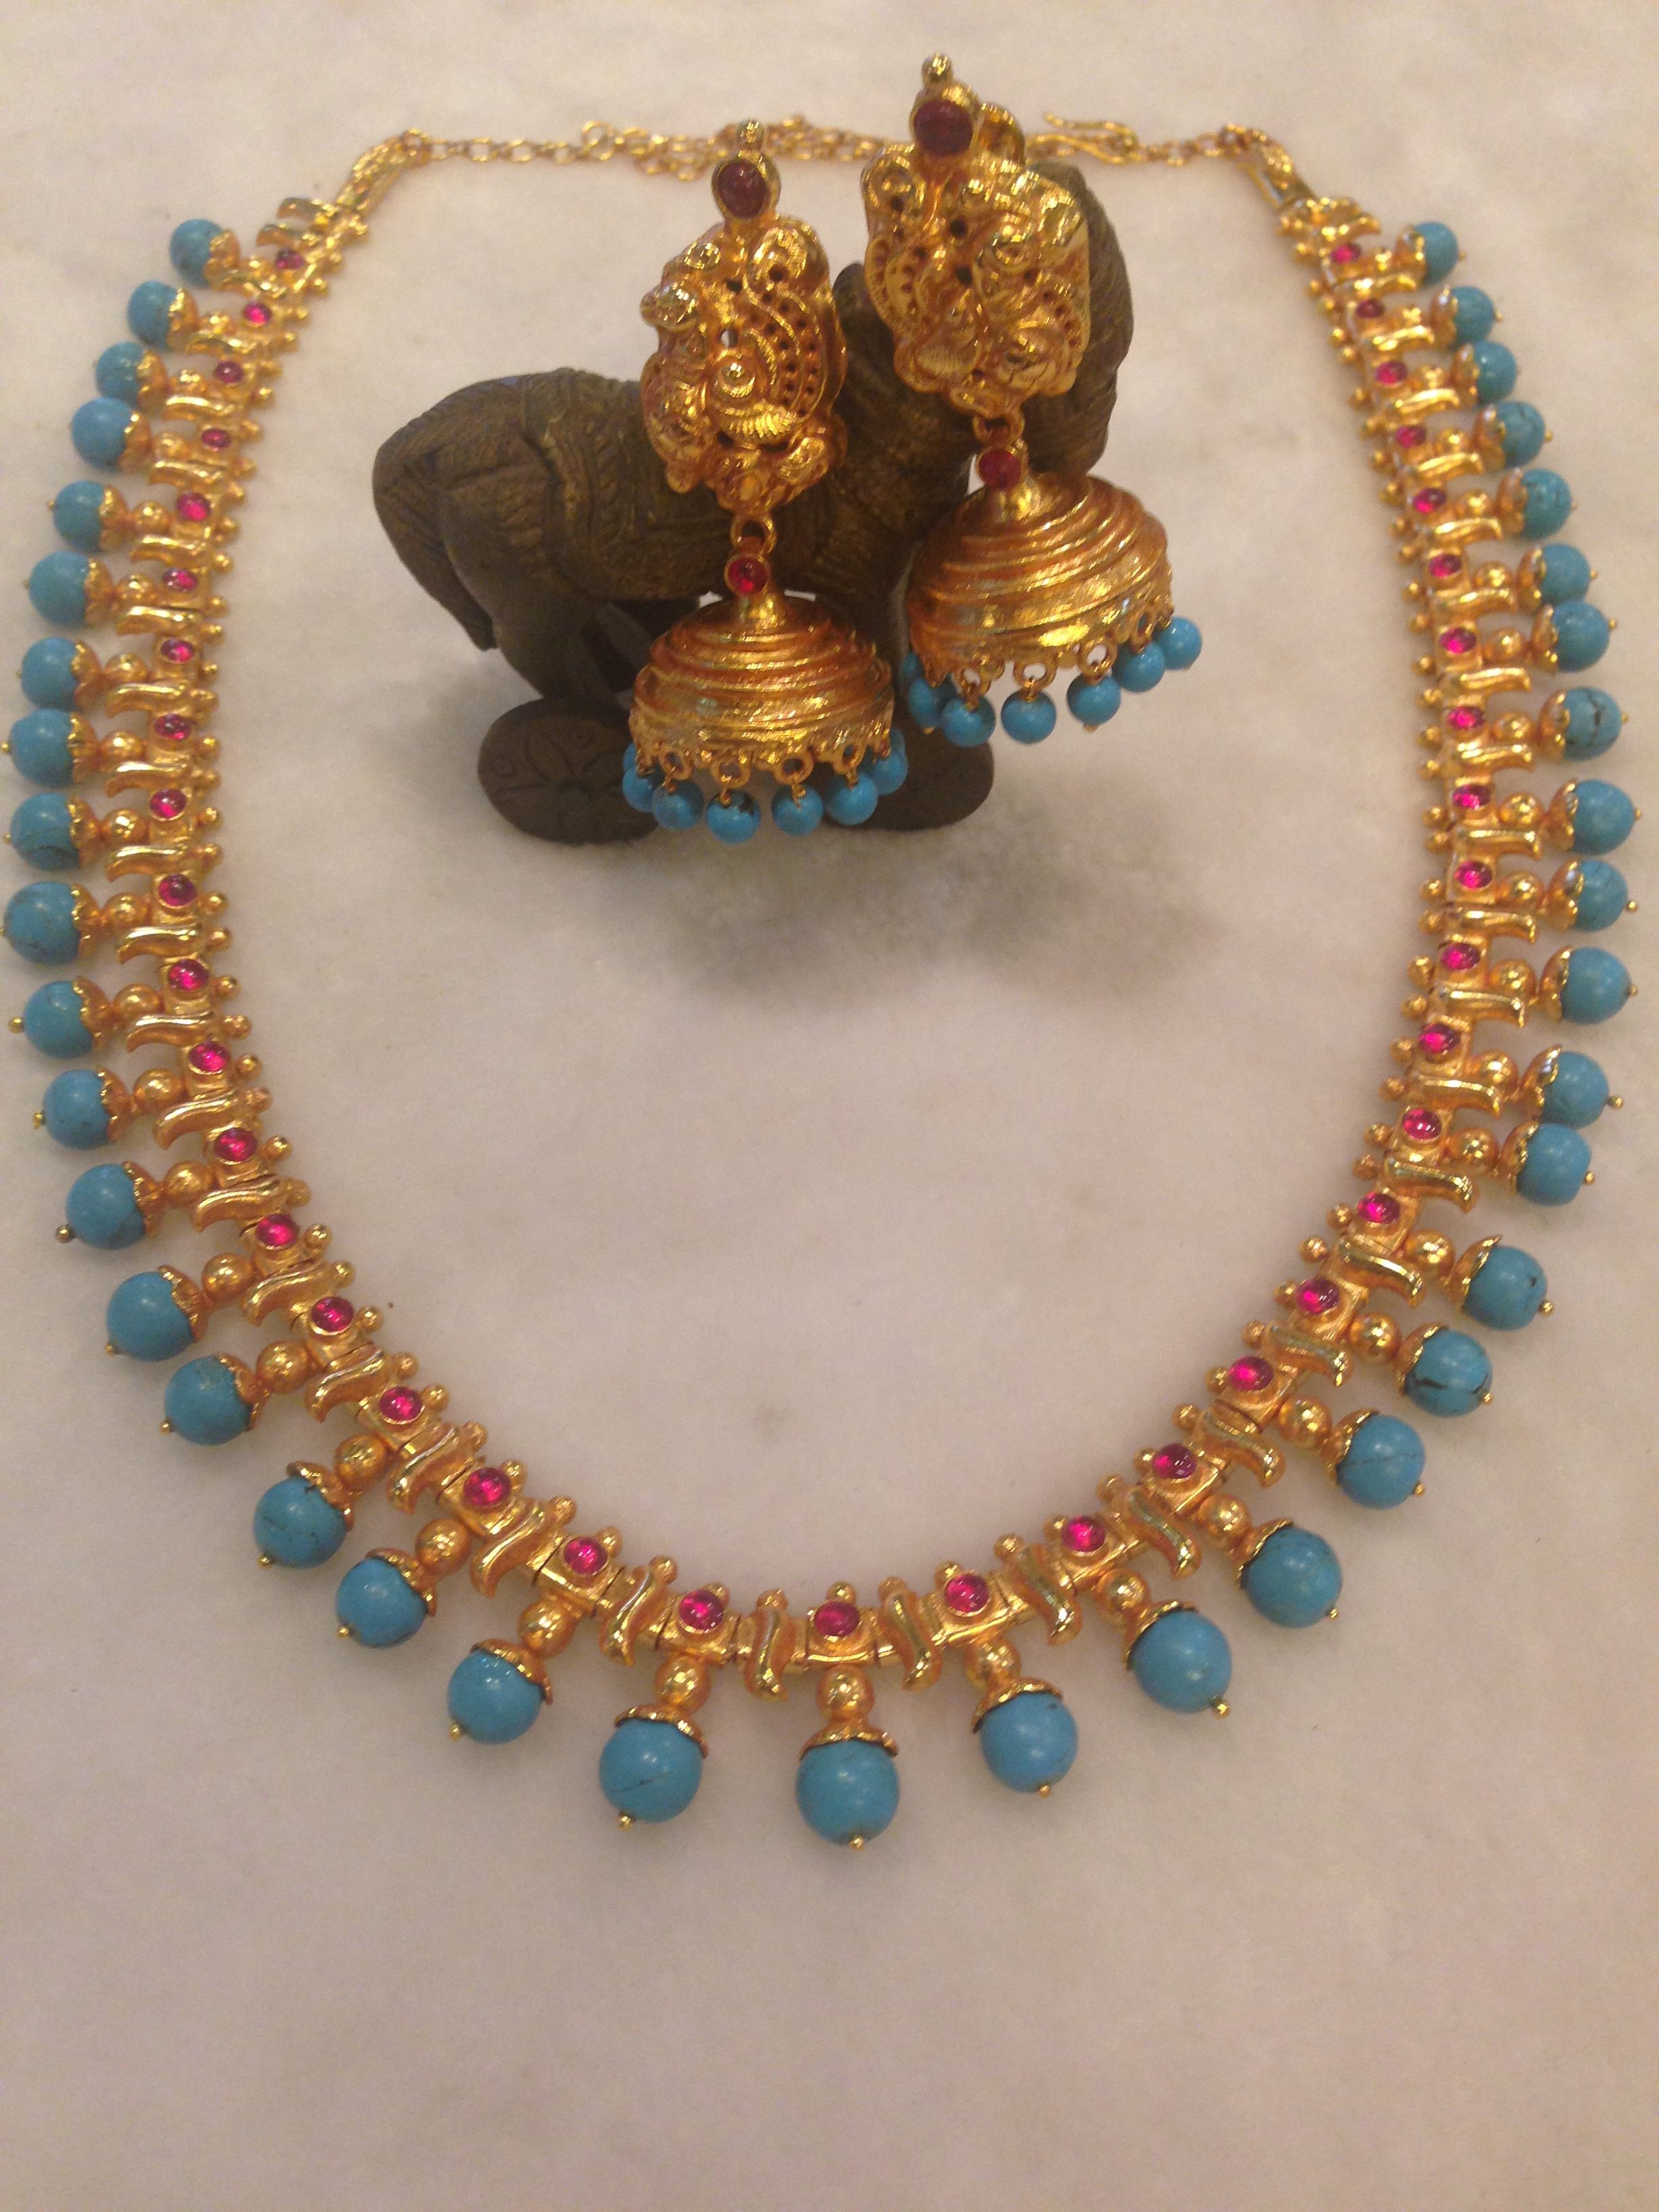 19 Super Simple Gold Necklace Designs That You Can't Resist! â¢ South India Jewels